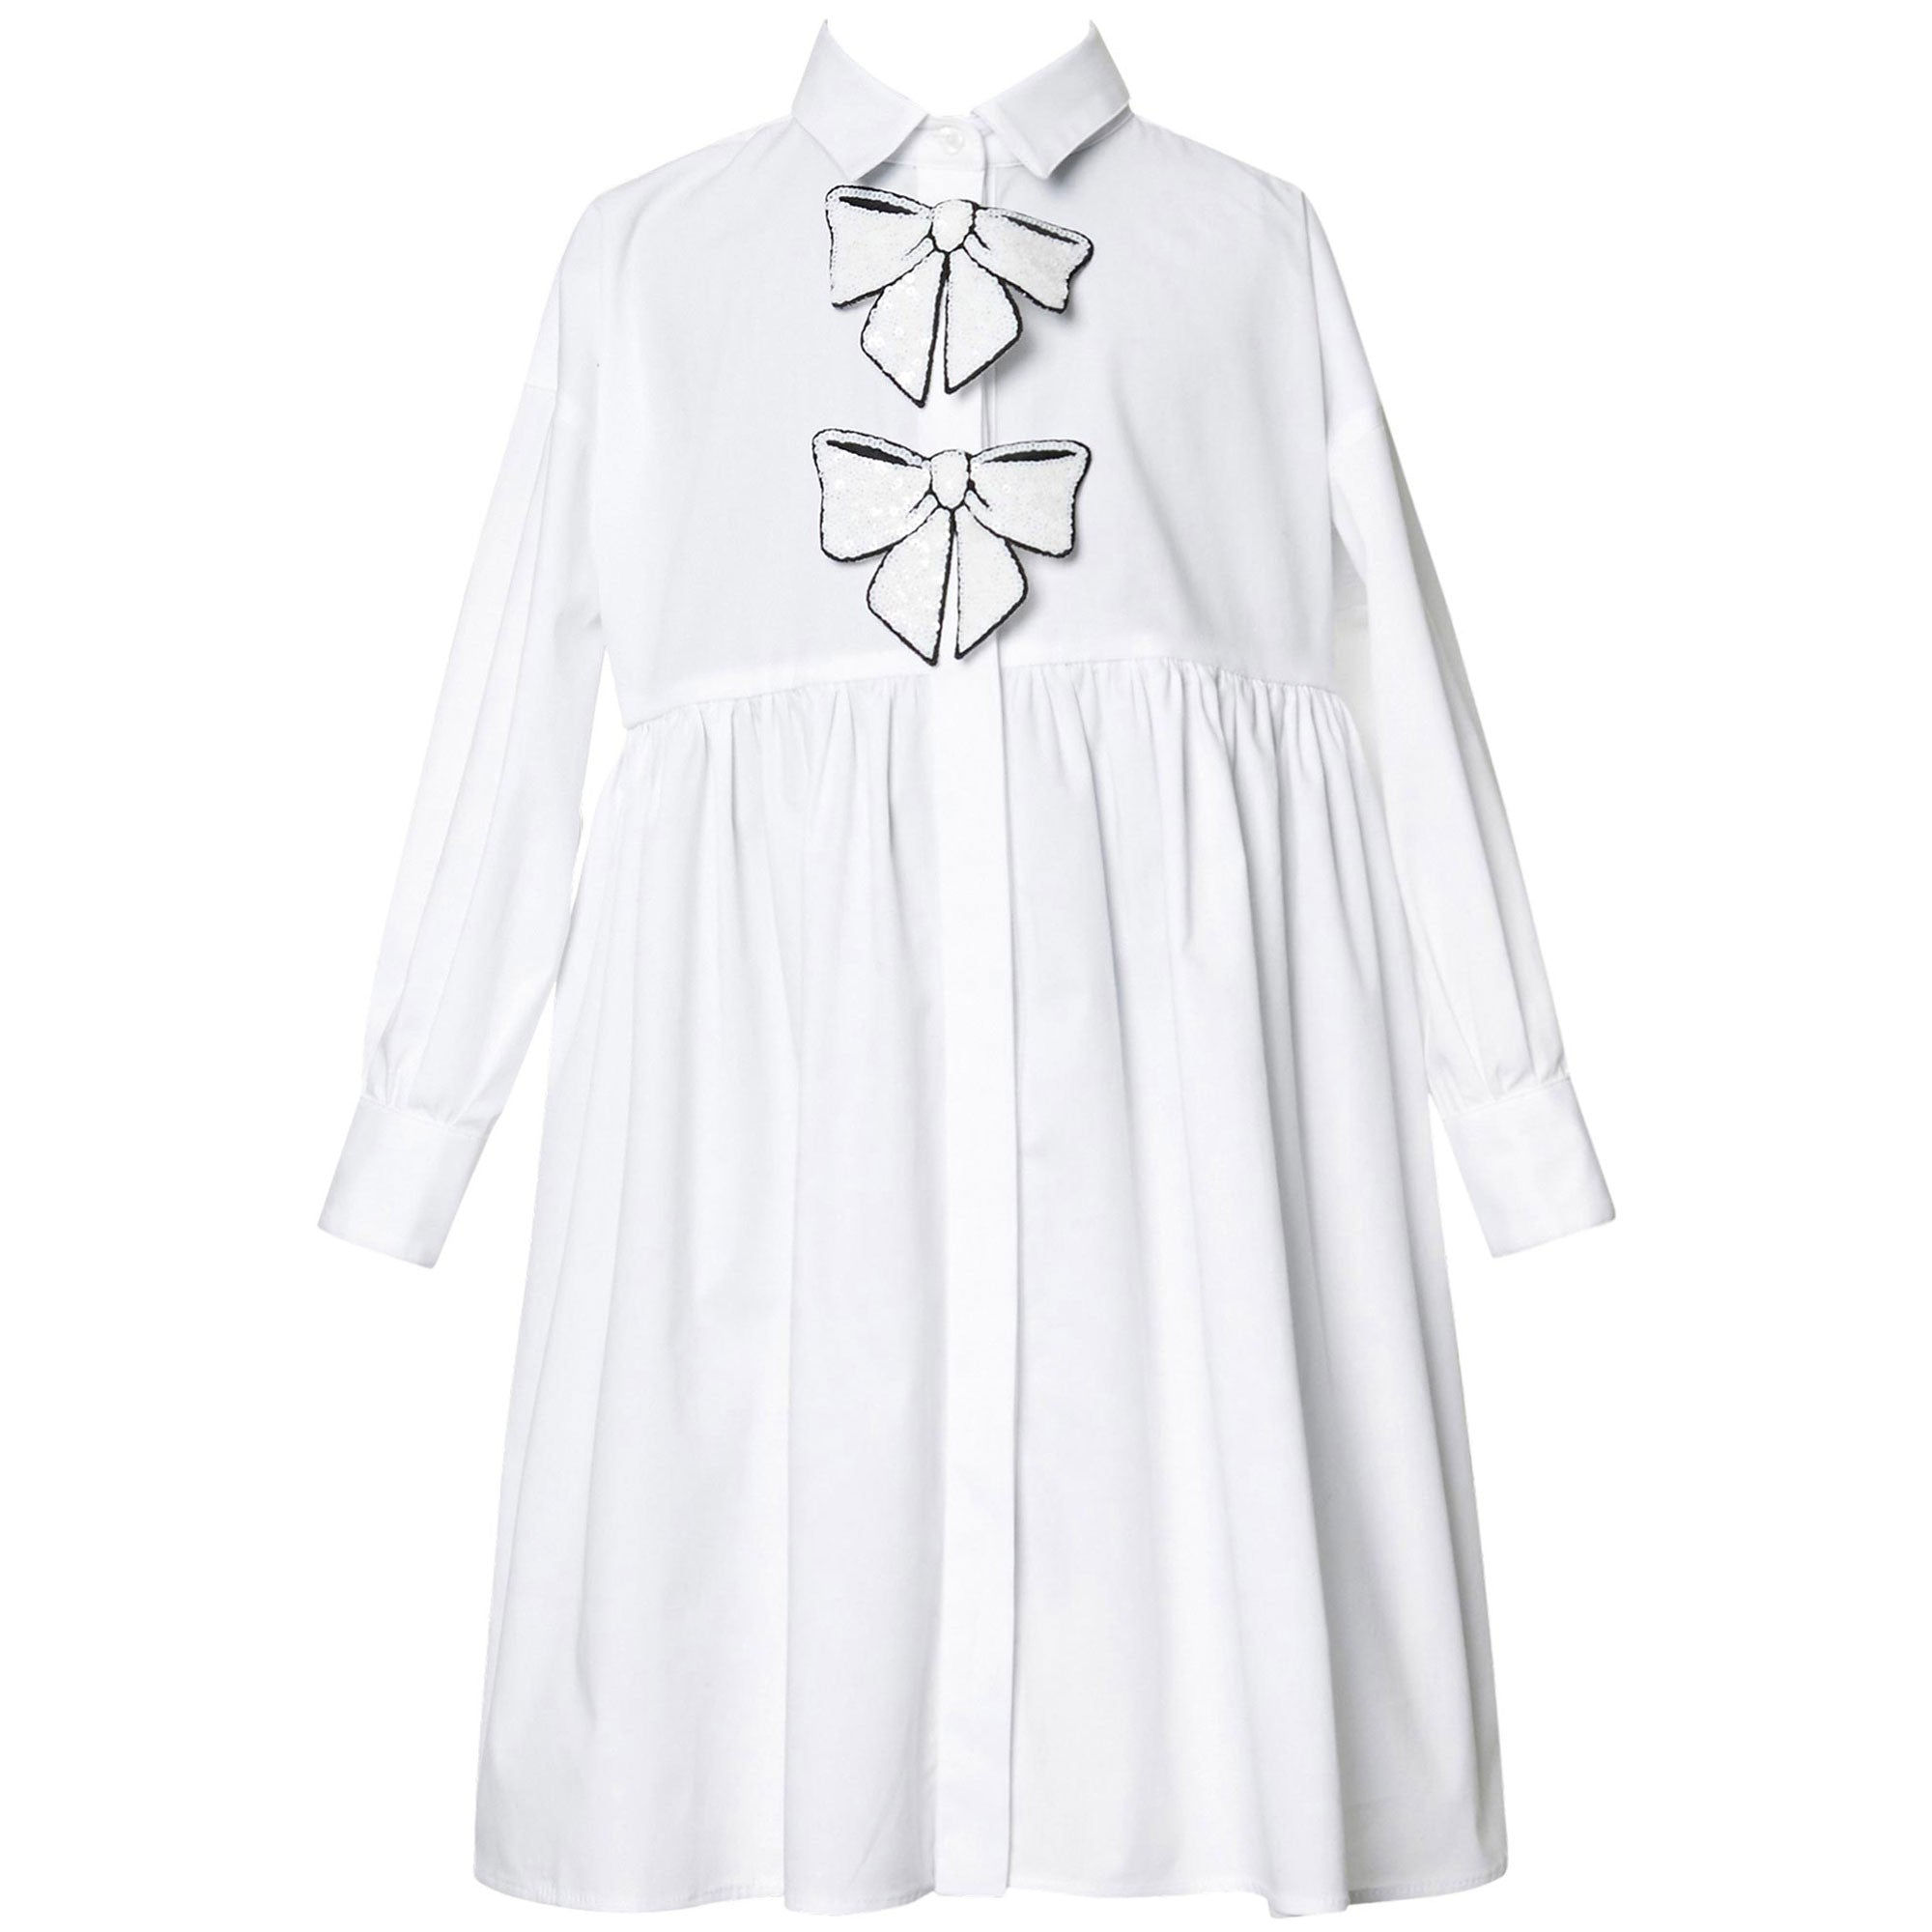 Girls White Bow Trims Cotton Dress - CÉMAROSE | Children's Fashion Store - 1